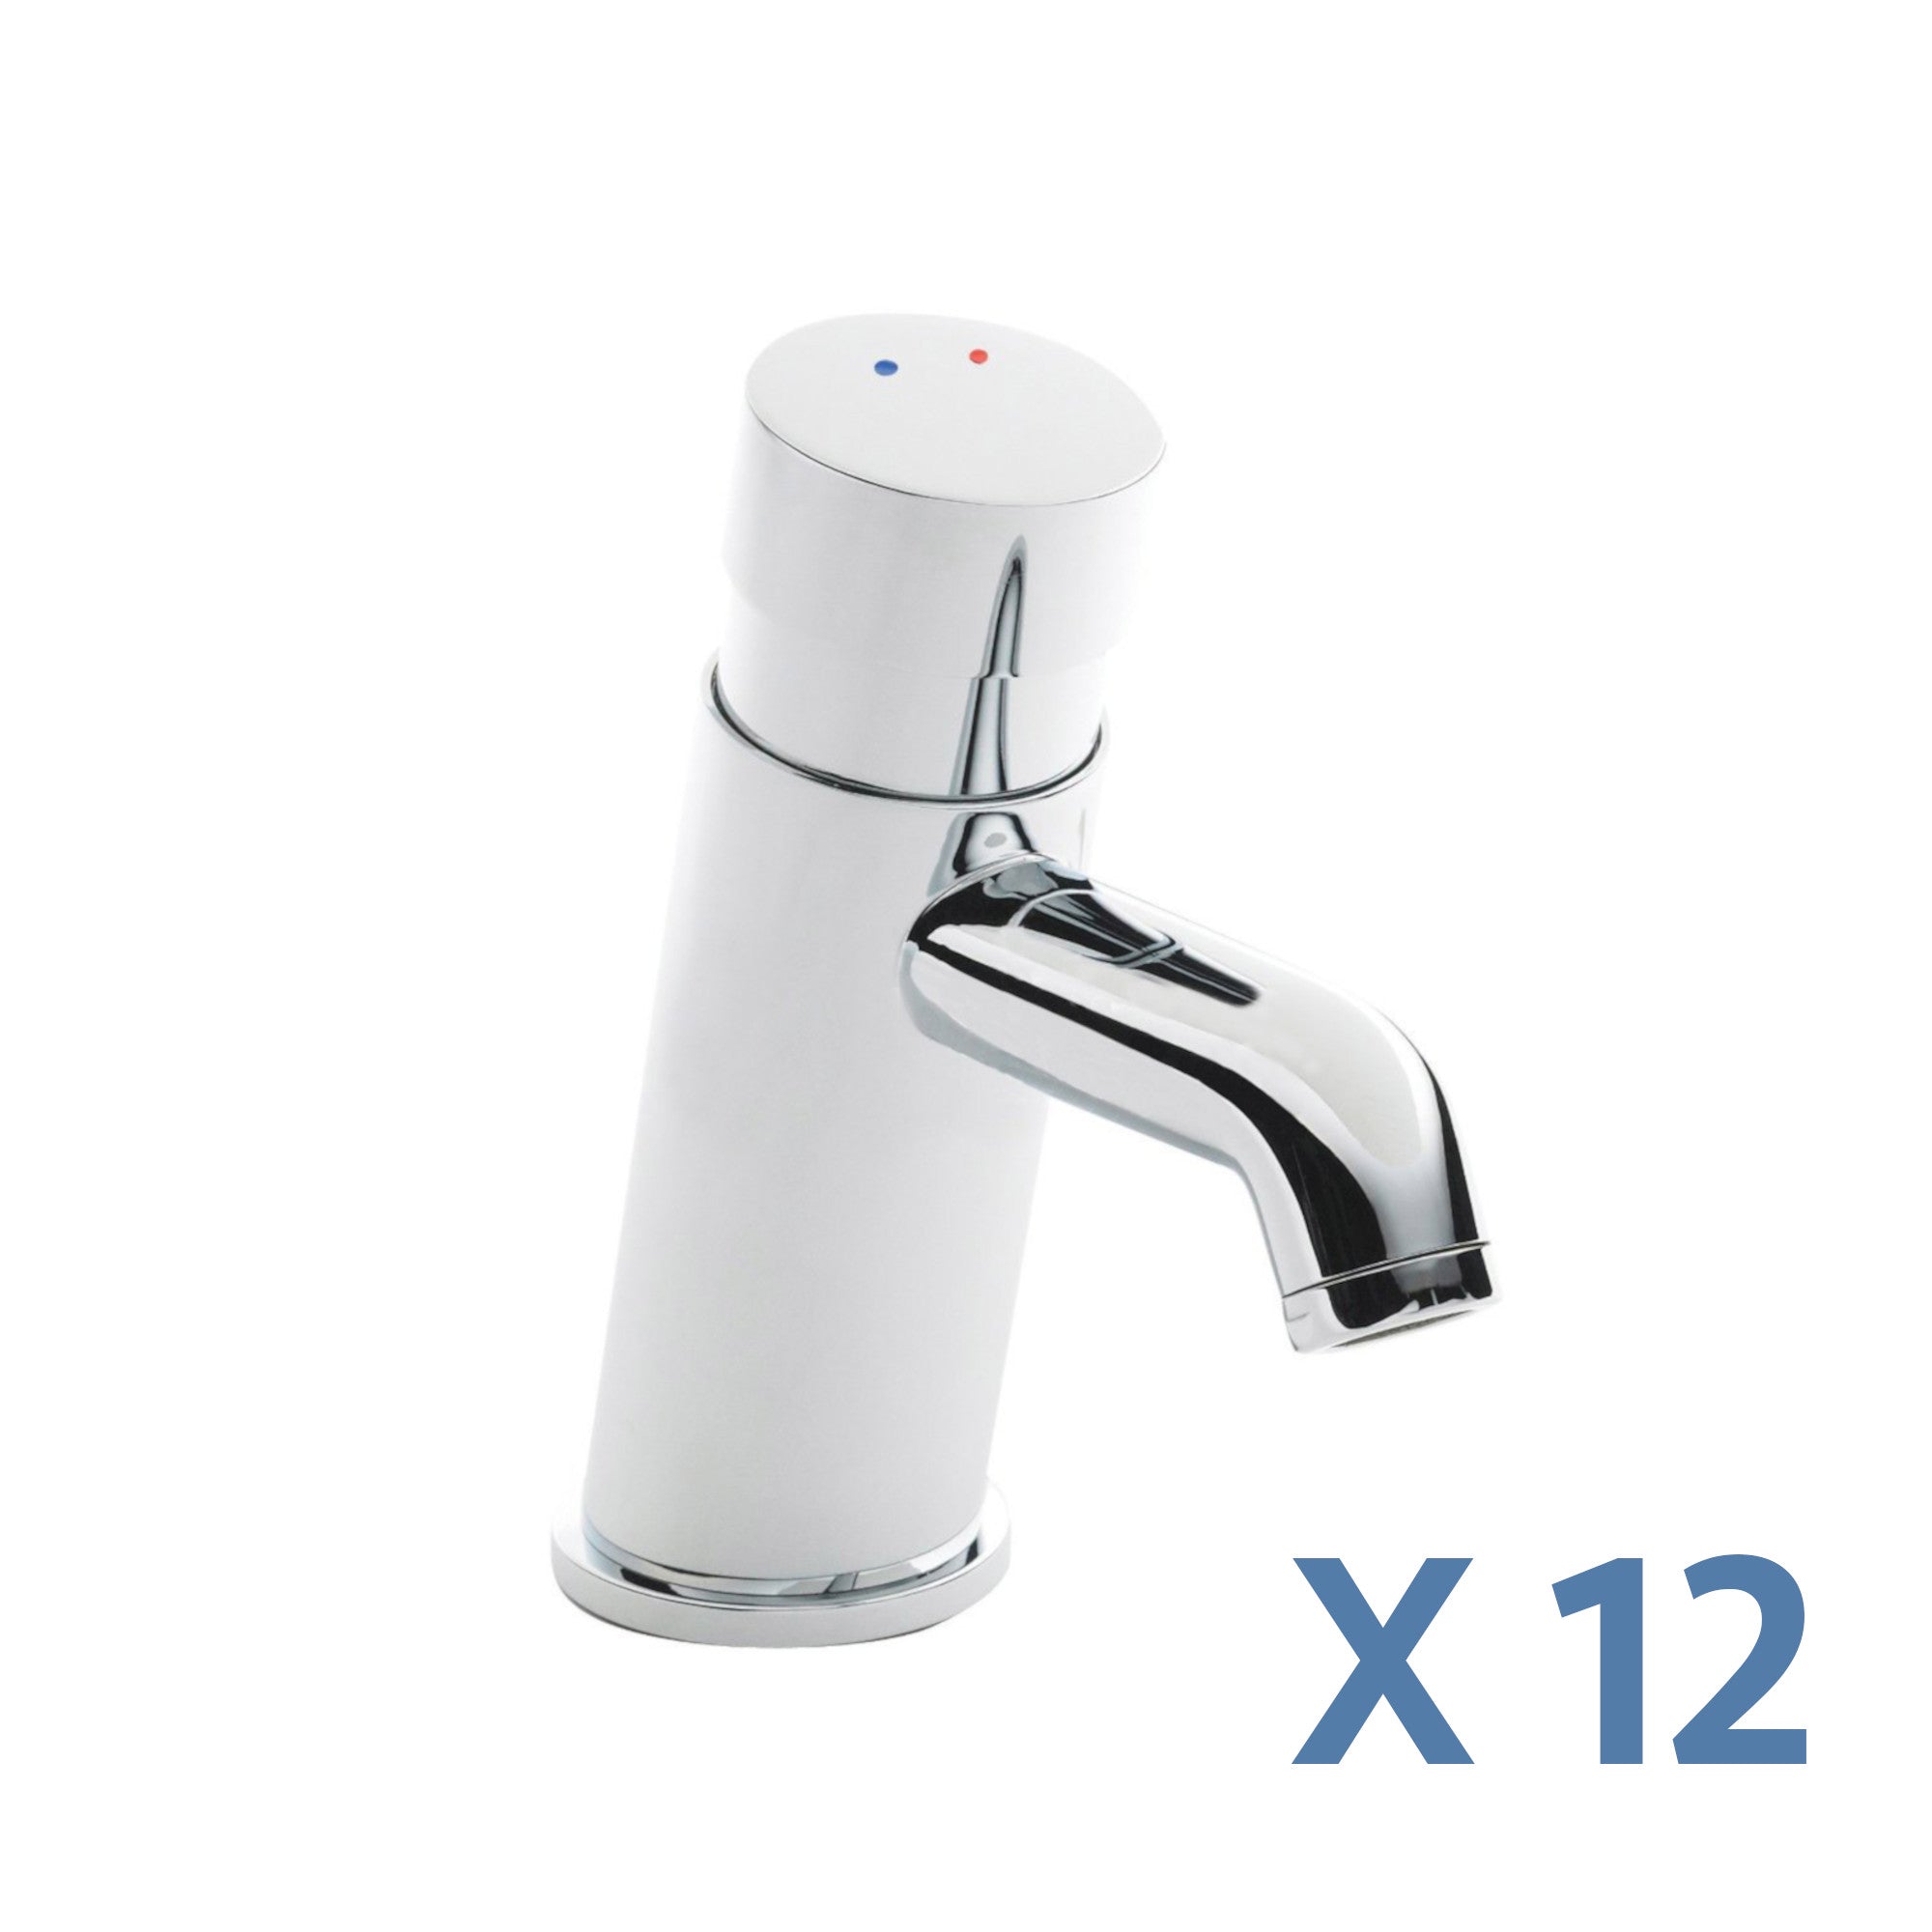 Vision mono non concussive time adjustable basin mixer tap modern - chrome - 12 pack